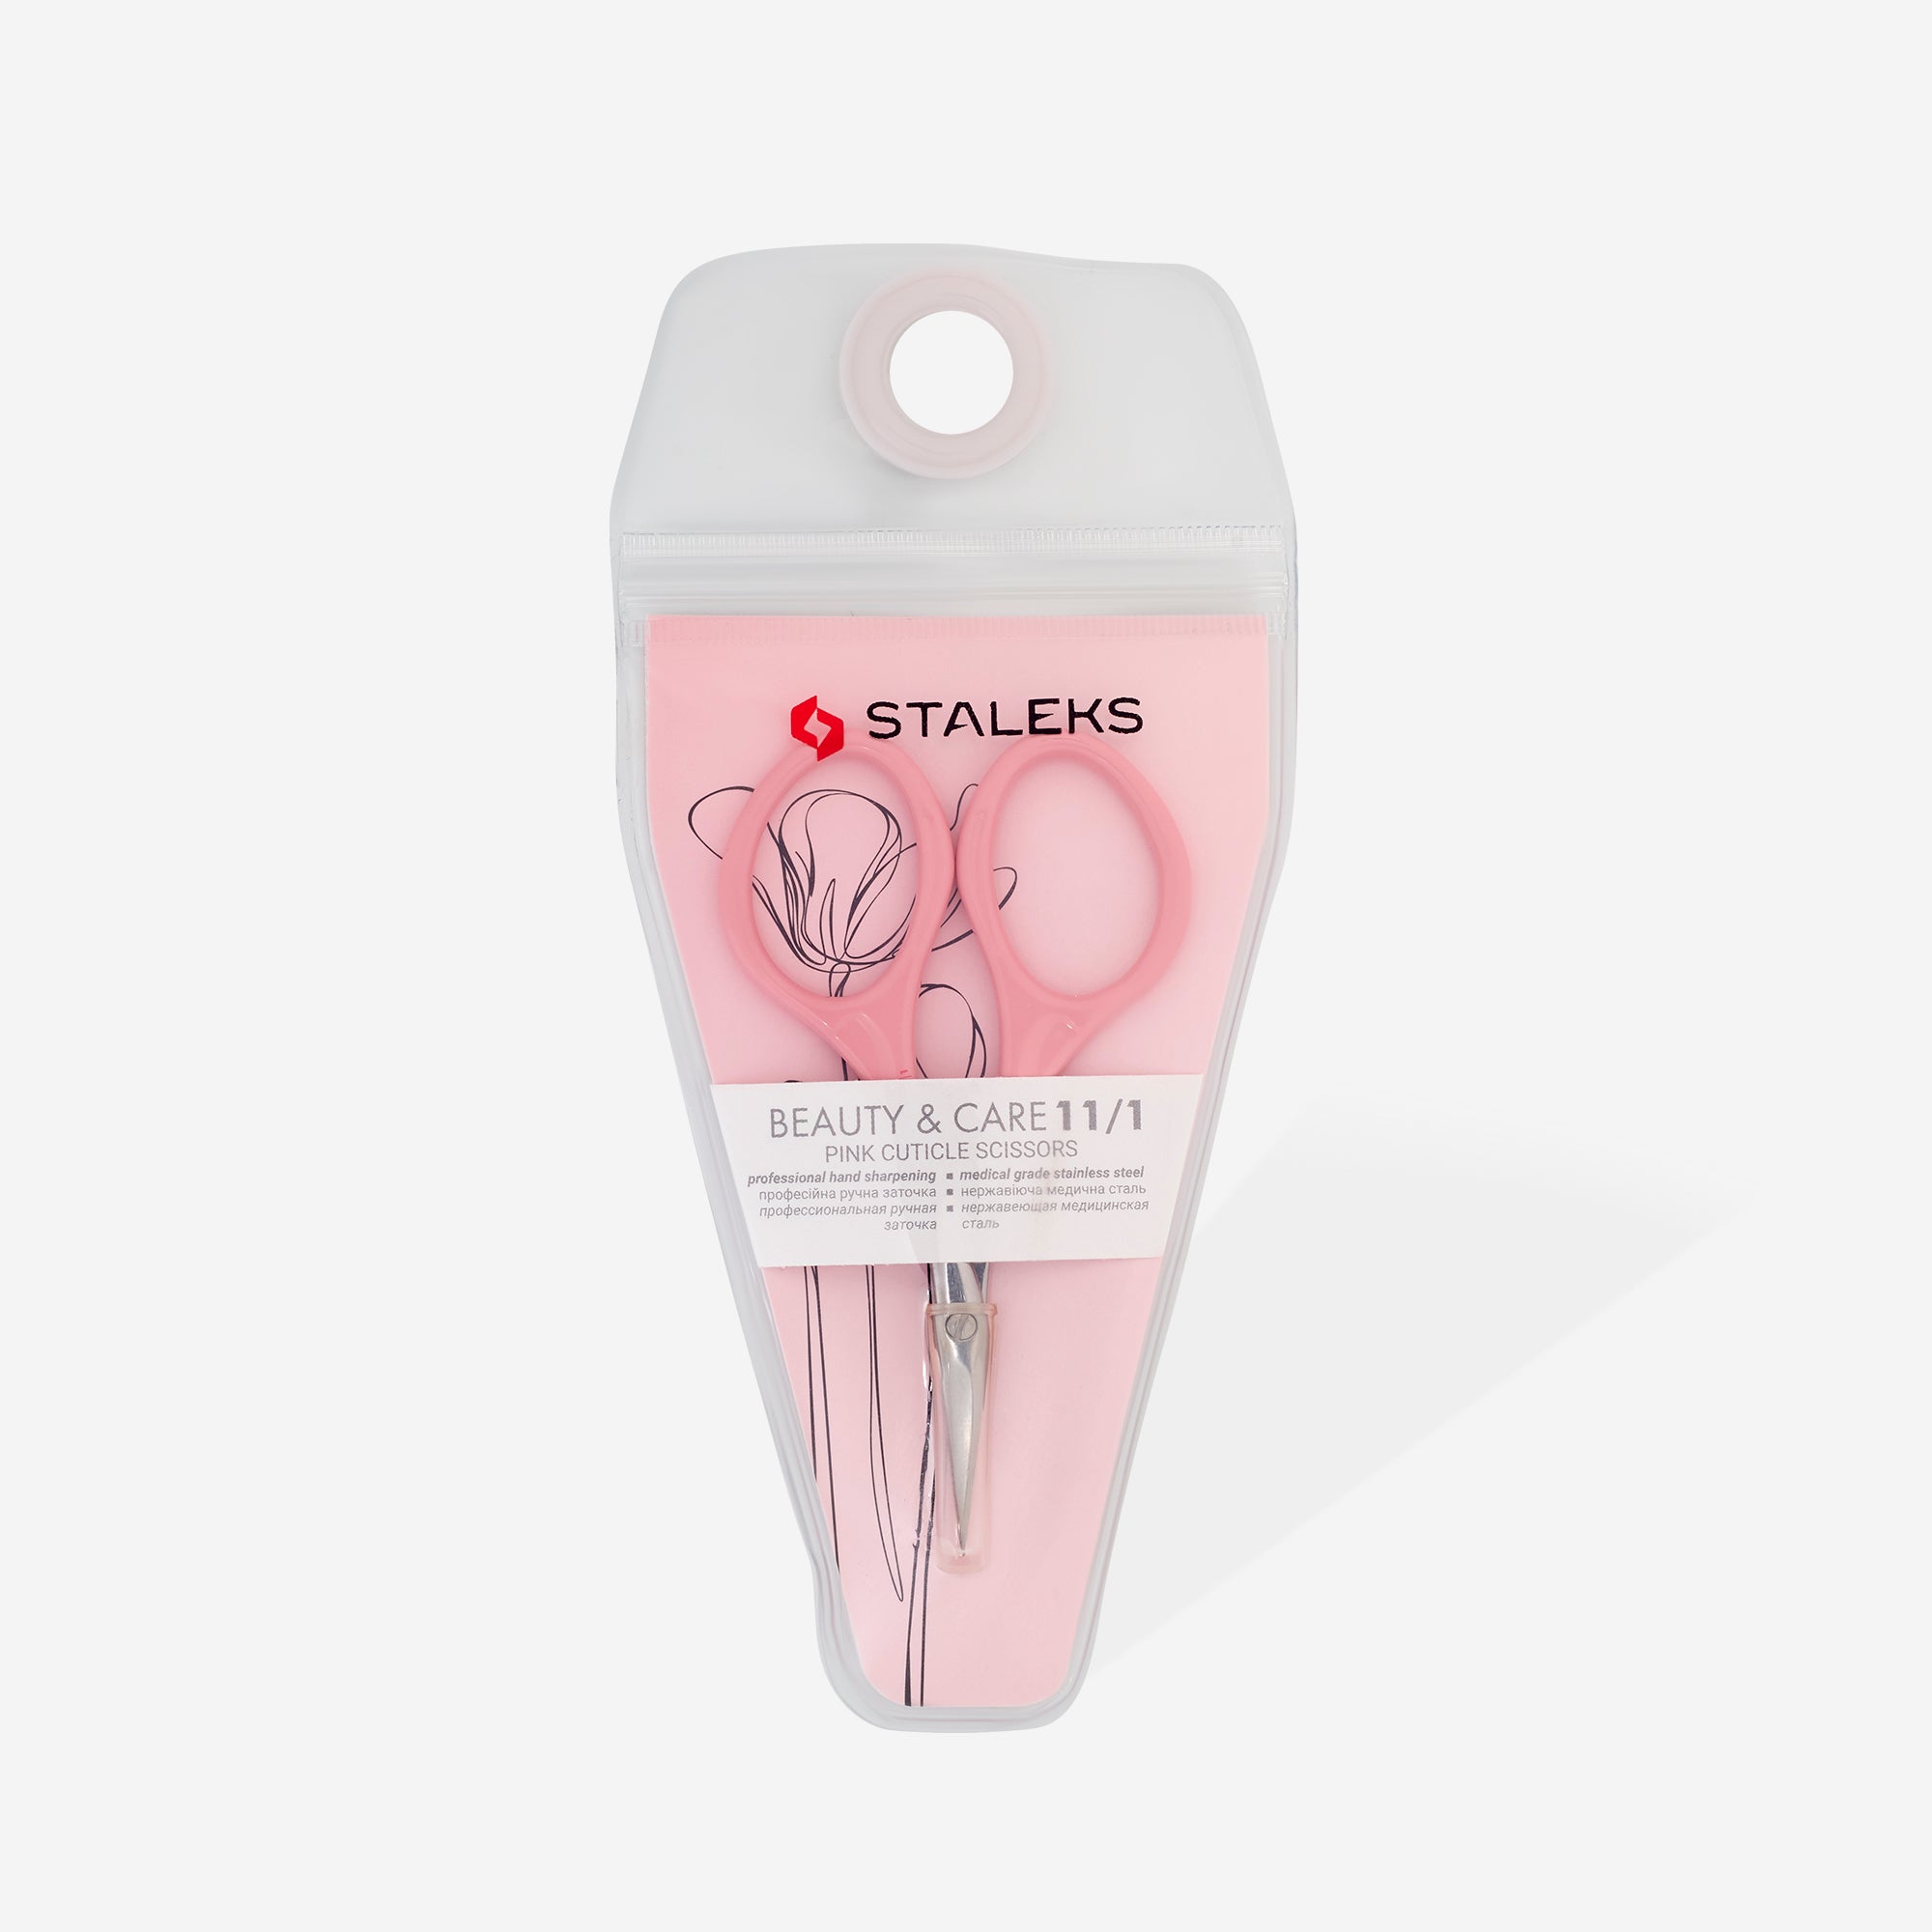 Pink cuticle scissors Staleks Beauty & Care 11 Type 1 SBC-11/1